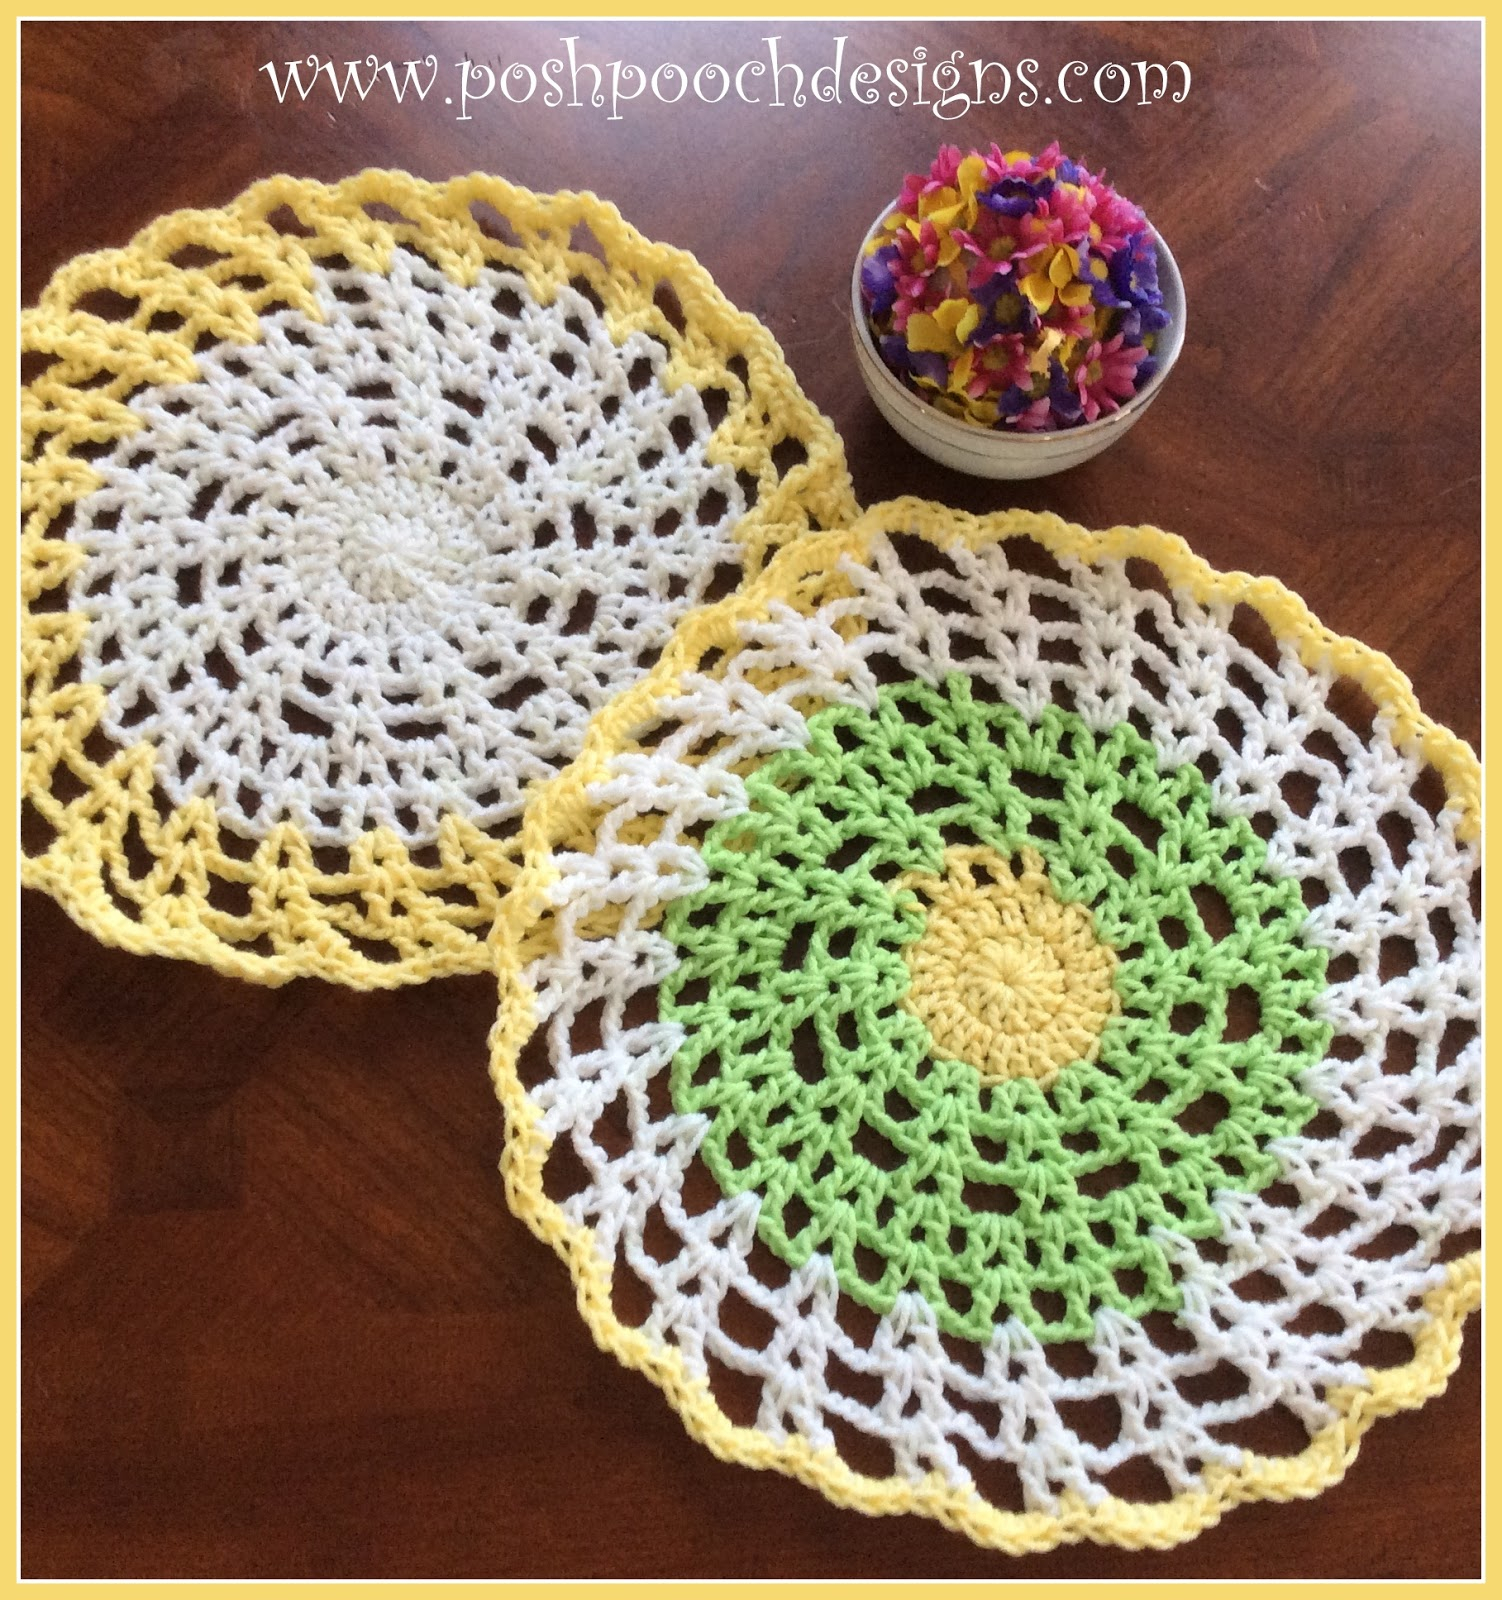 Crochet Placemat Pattern Posh Pooch Designs Dog Clothes Round Cotton Placemat Free Crochet